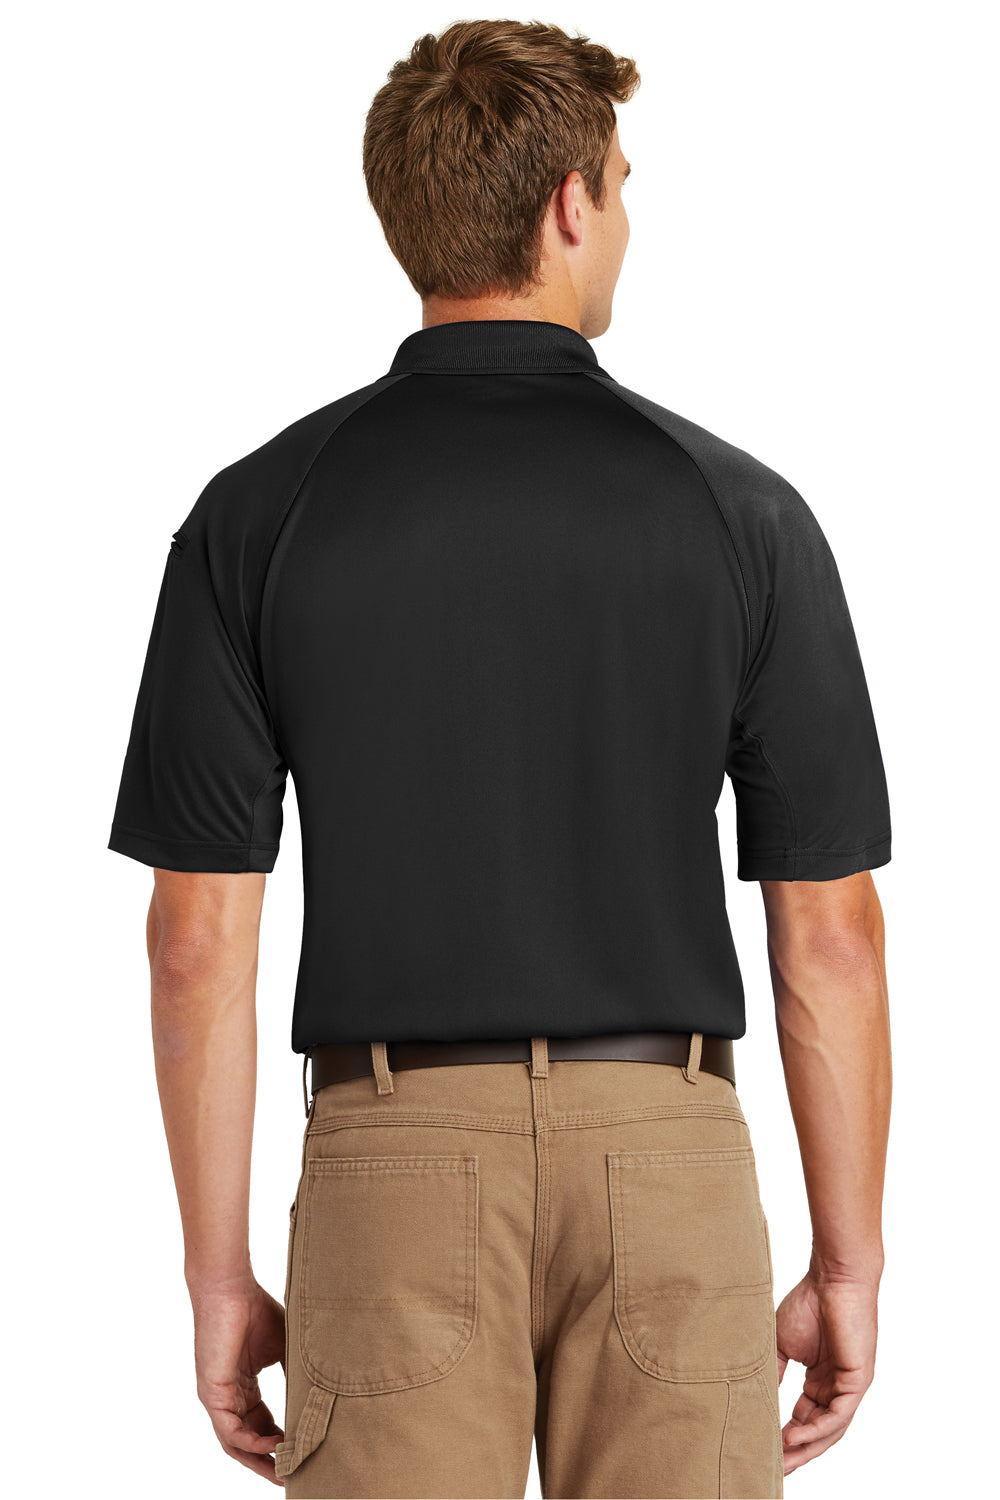 CornerStone CS410 Mens Select Tactical Moisture Wicking Short Sleeve Polo Shirt Black Back